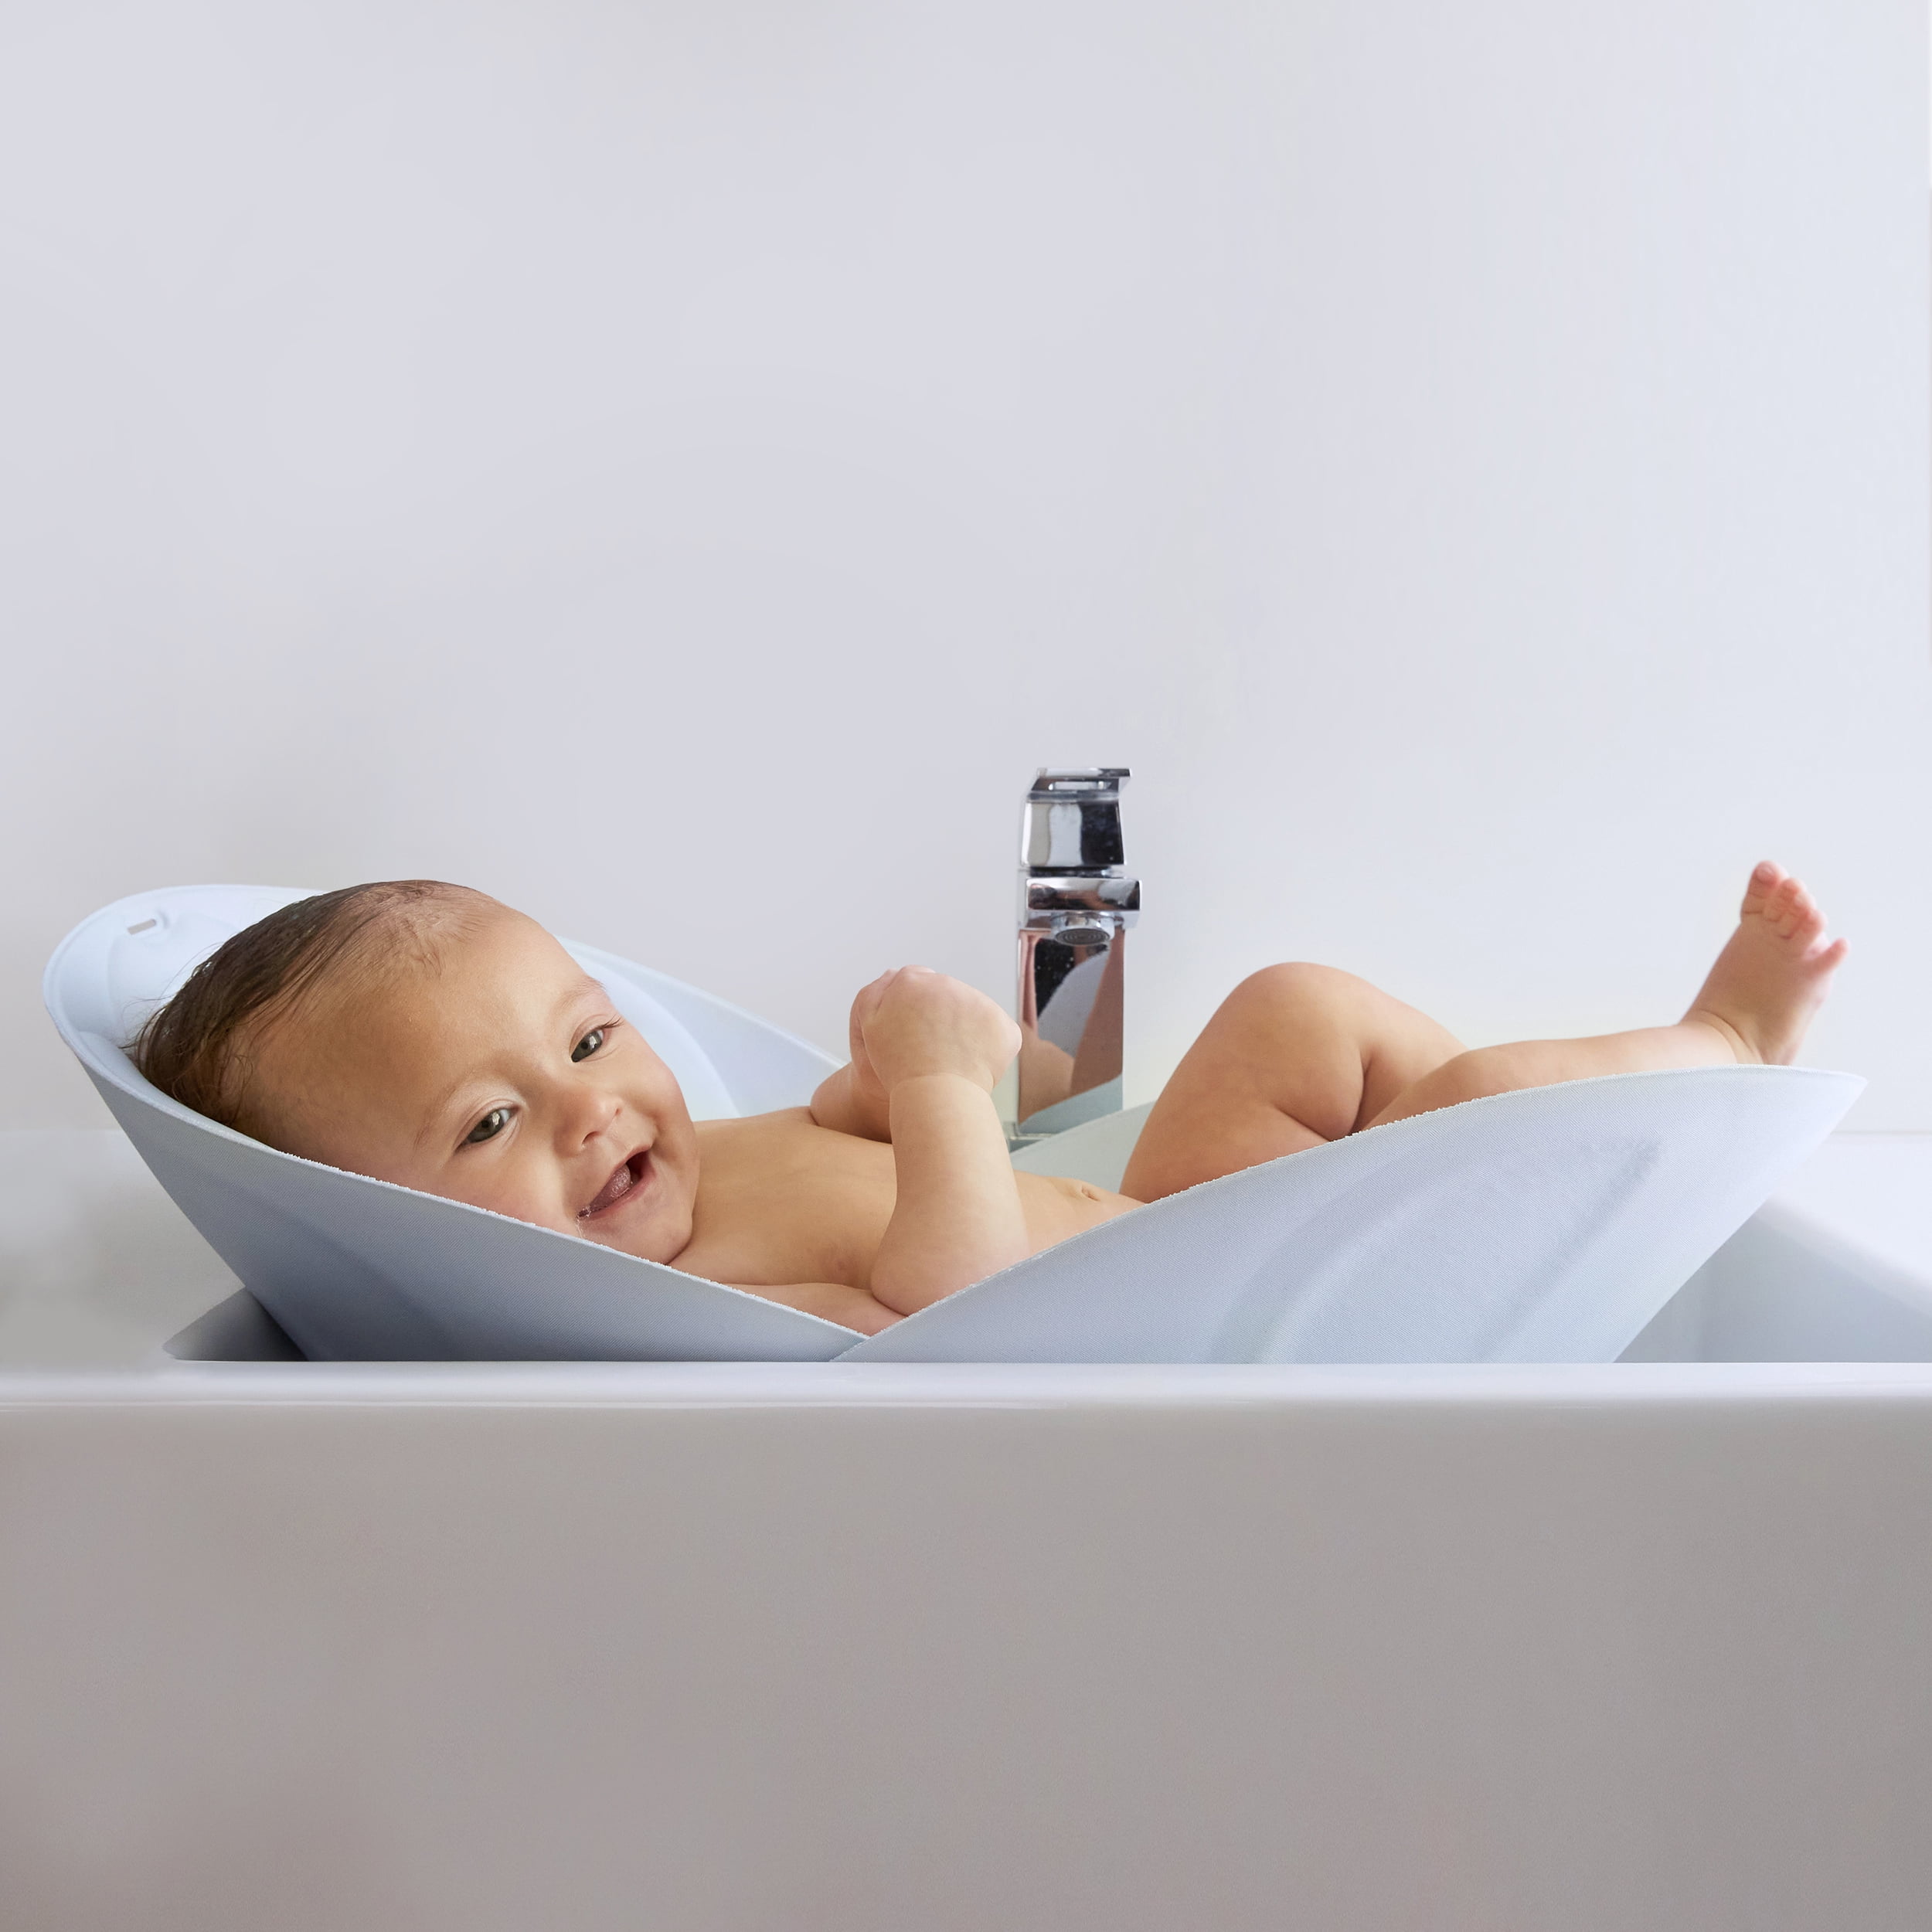 Baby Bathtime Teddy Comfort Soft Support Bath Sponge Mat Toddler Newborn Nonslip 